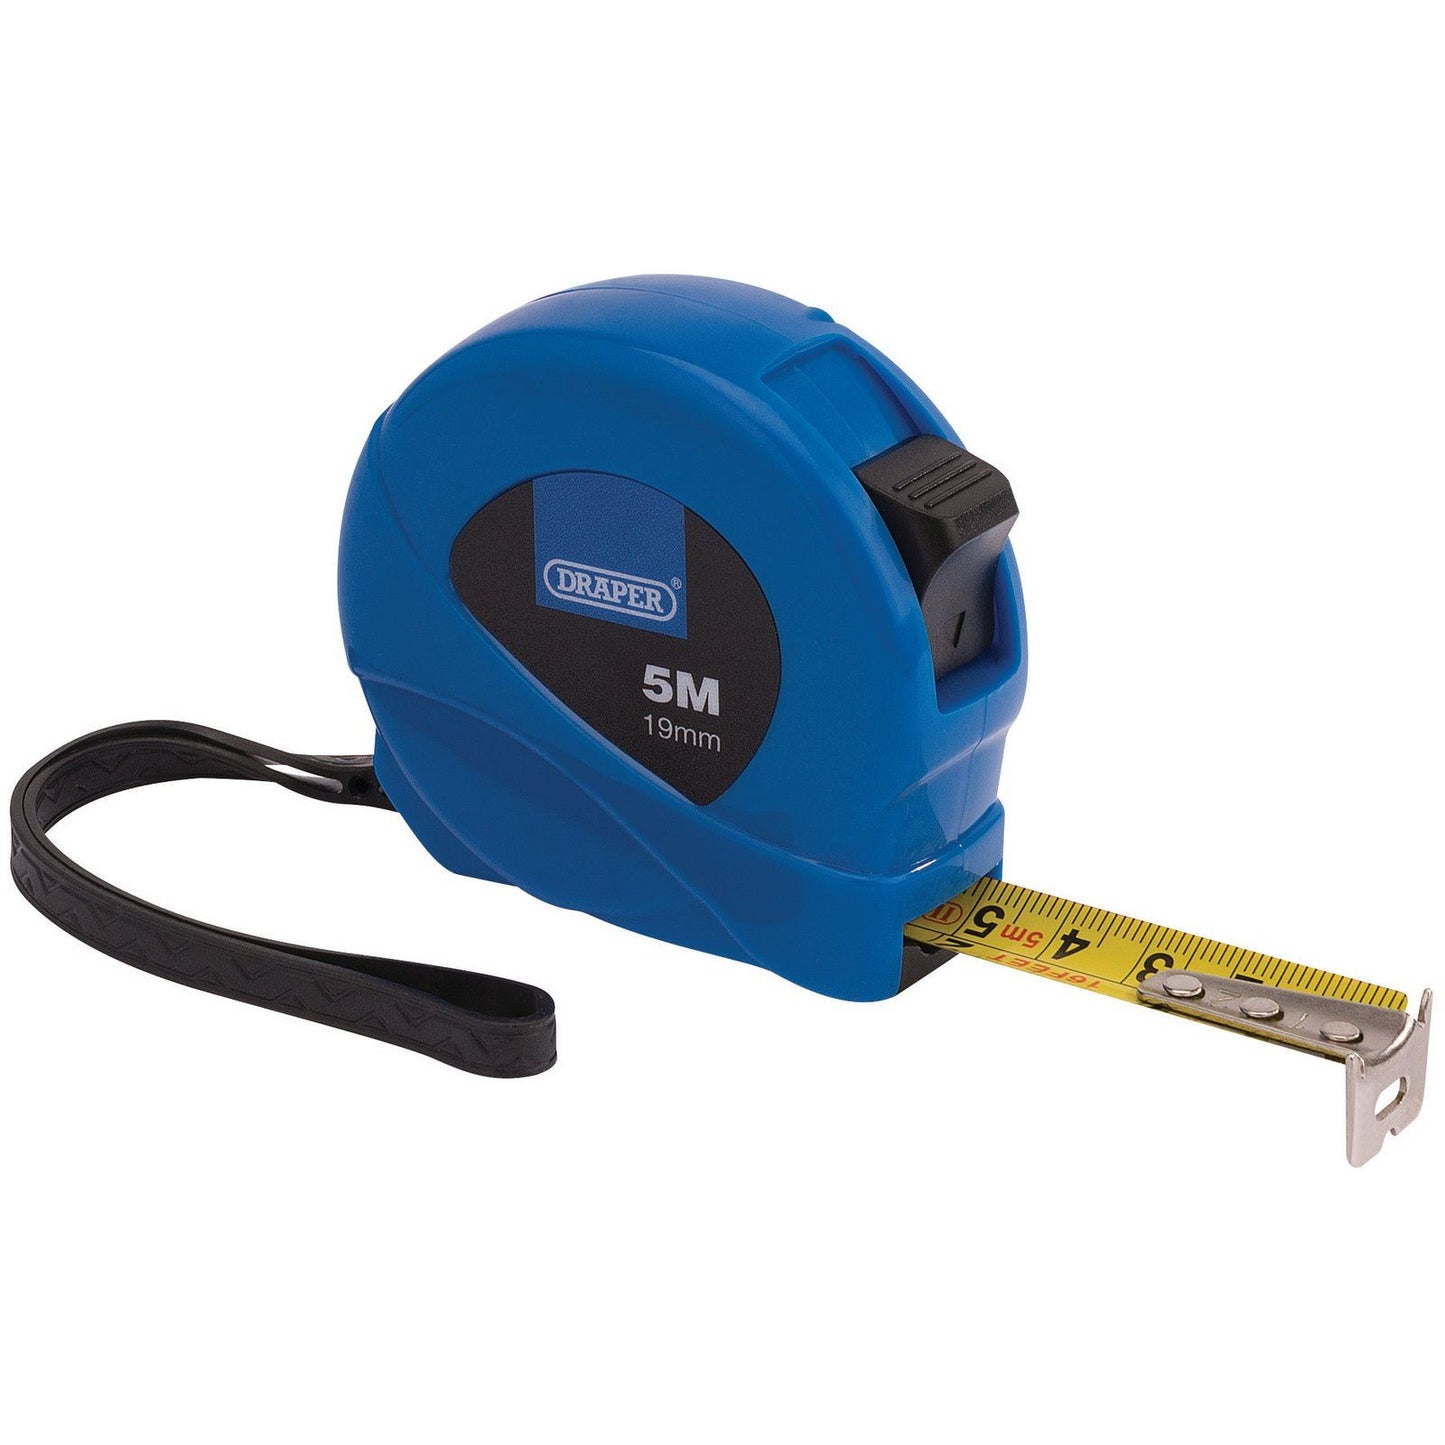 Draper 1x 5m/16Ft Easy Find Measuring Tape Garage Professional Standard Tool - 75881